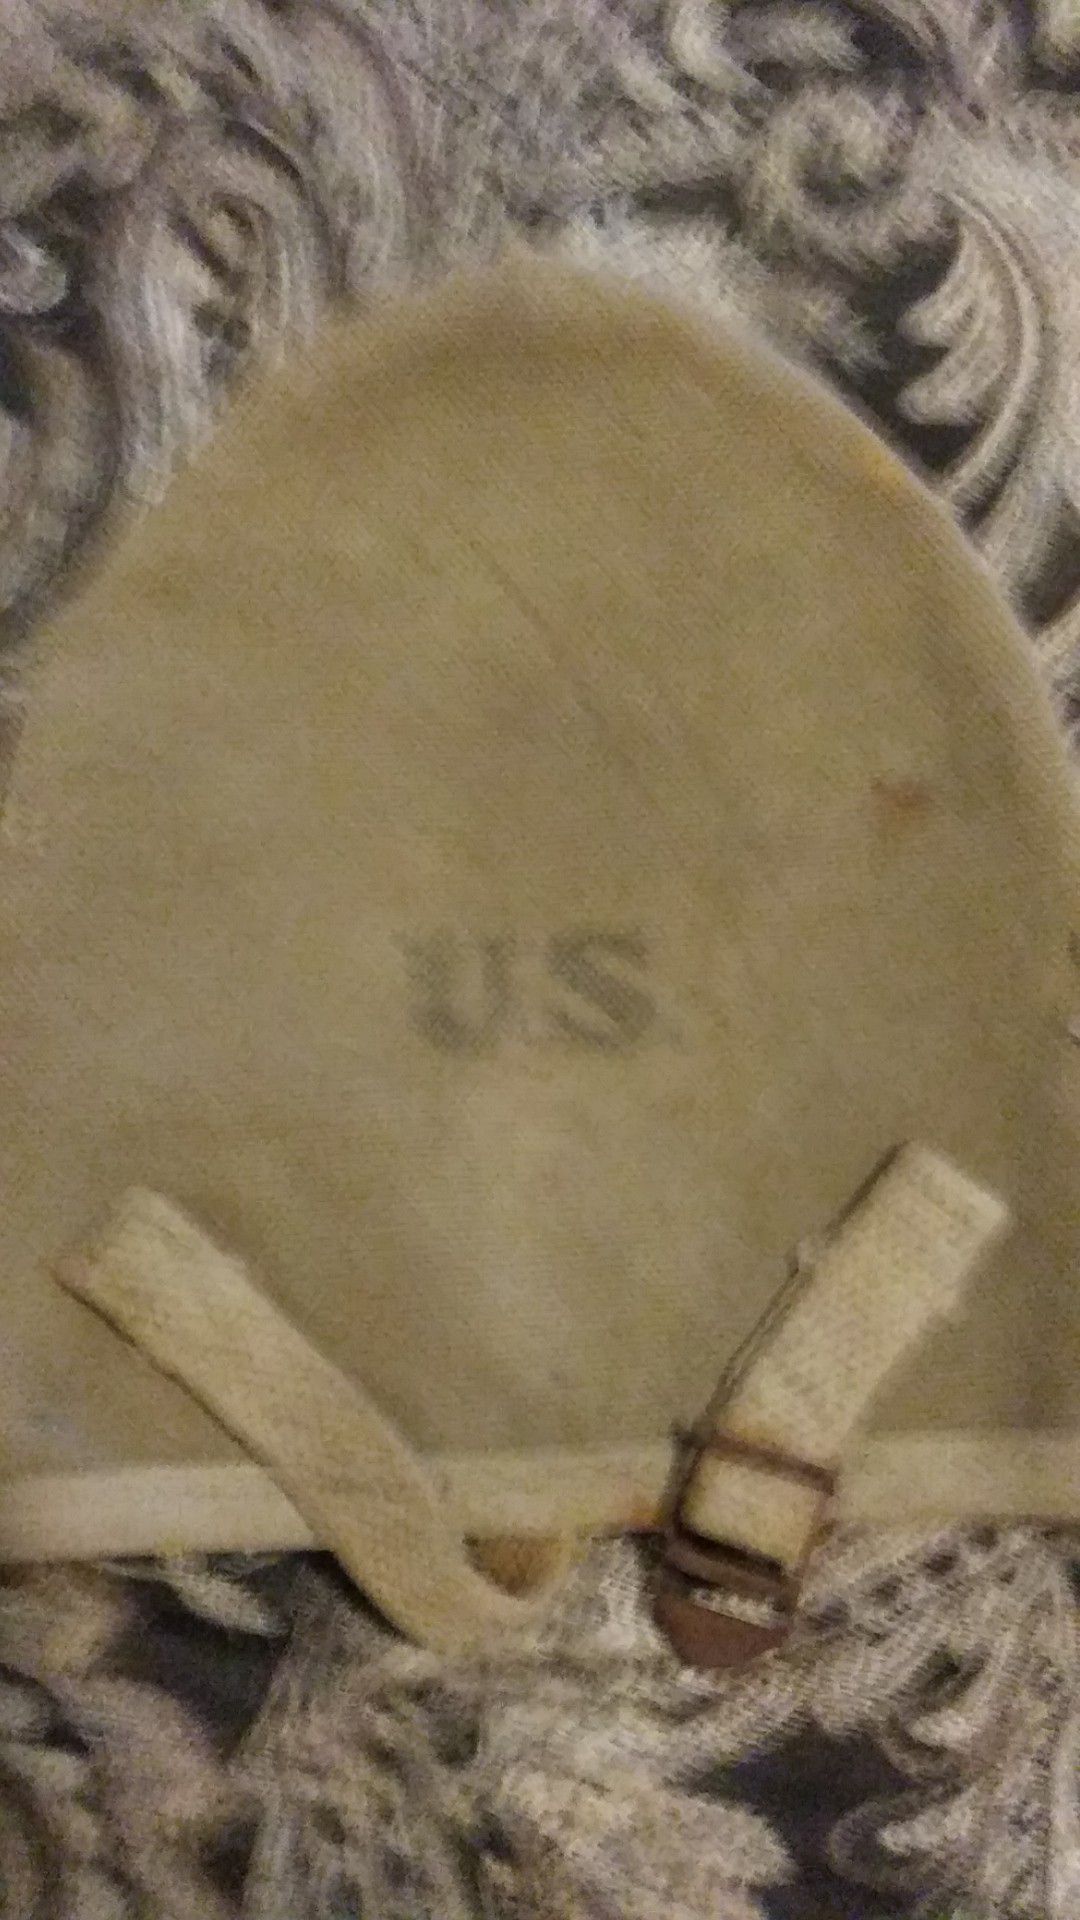 1942 U.S army hand shovel cover